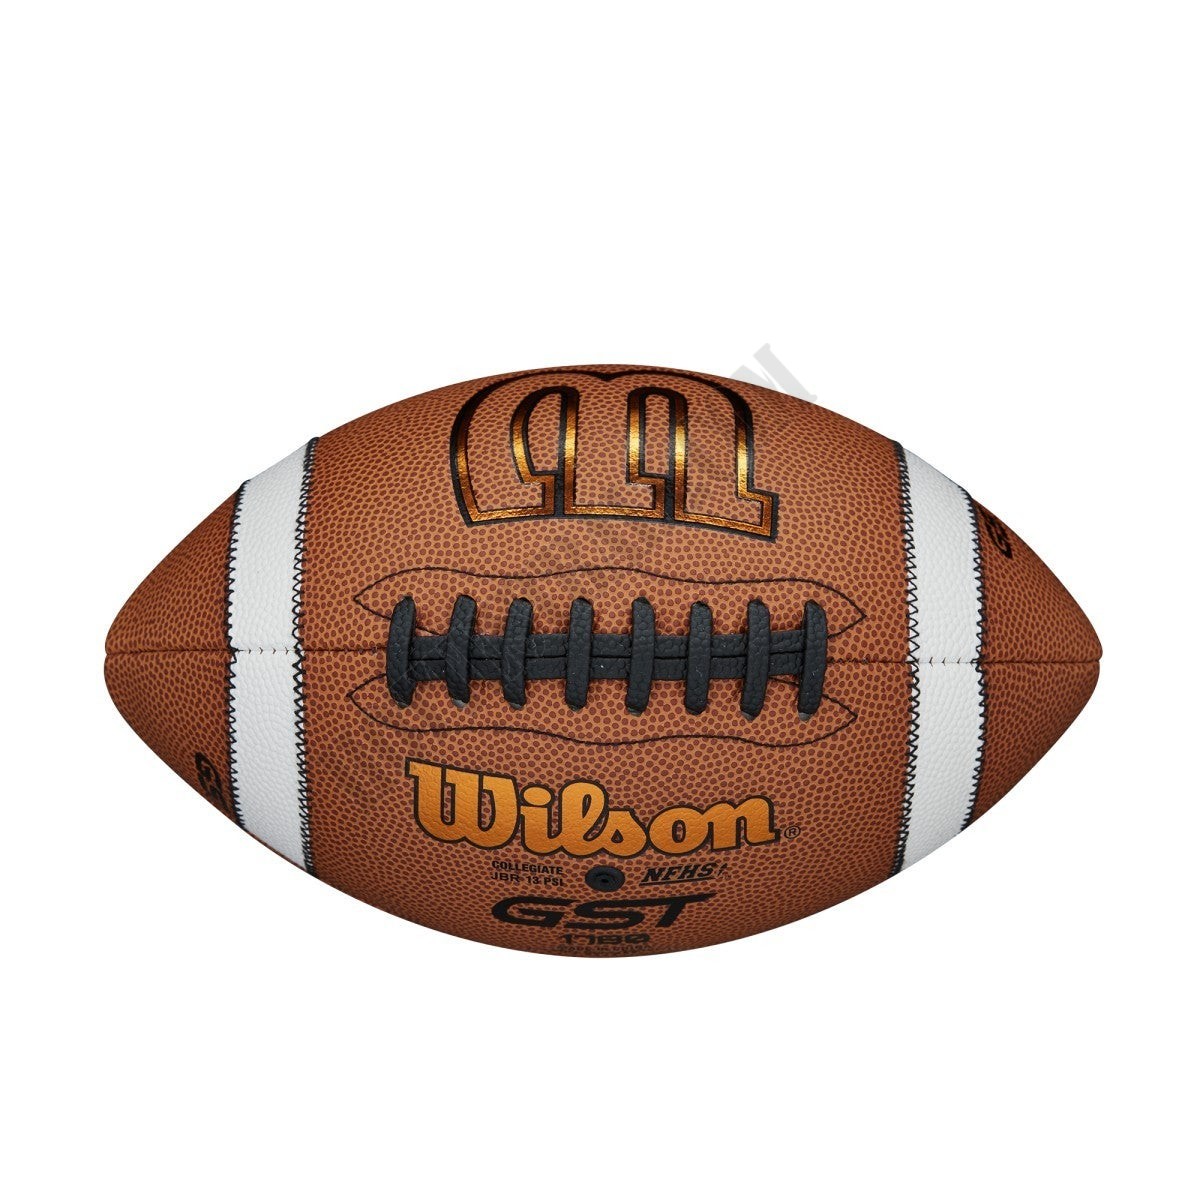 GST Composite Football - Wilson Discount Store - -3